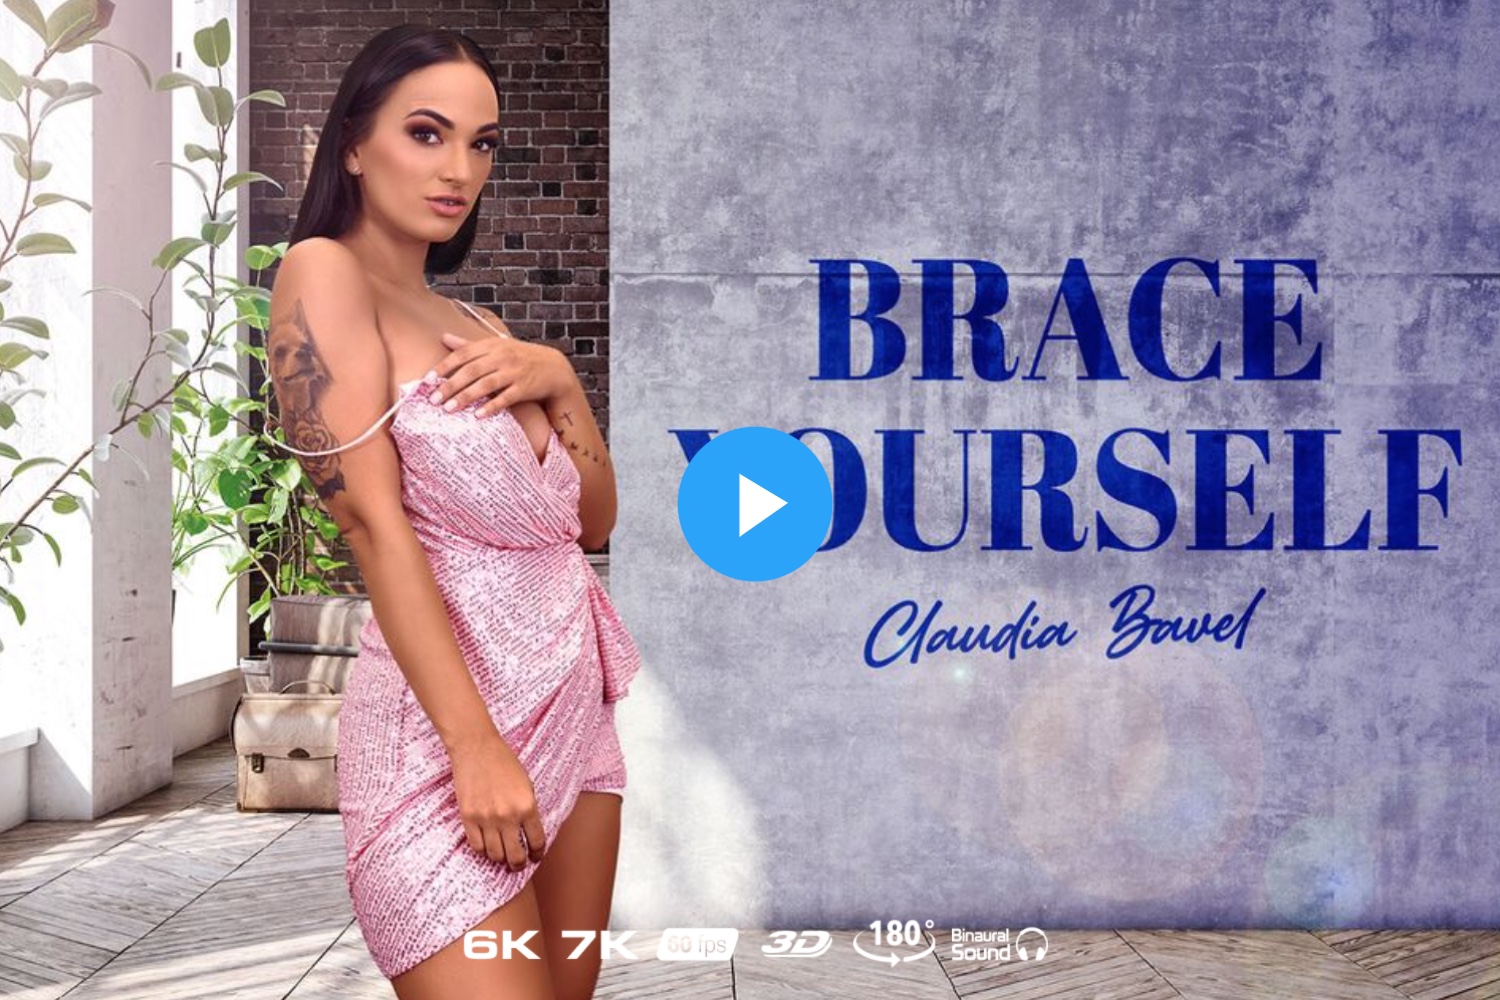 Brace Yourself - Claudia Bavel VR Porn - Claudia Bavel Virtual Reality Porn